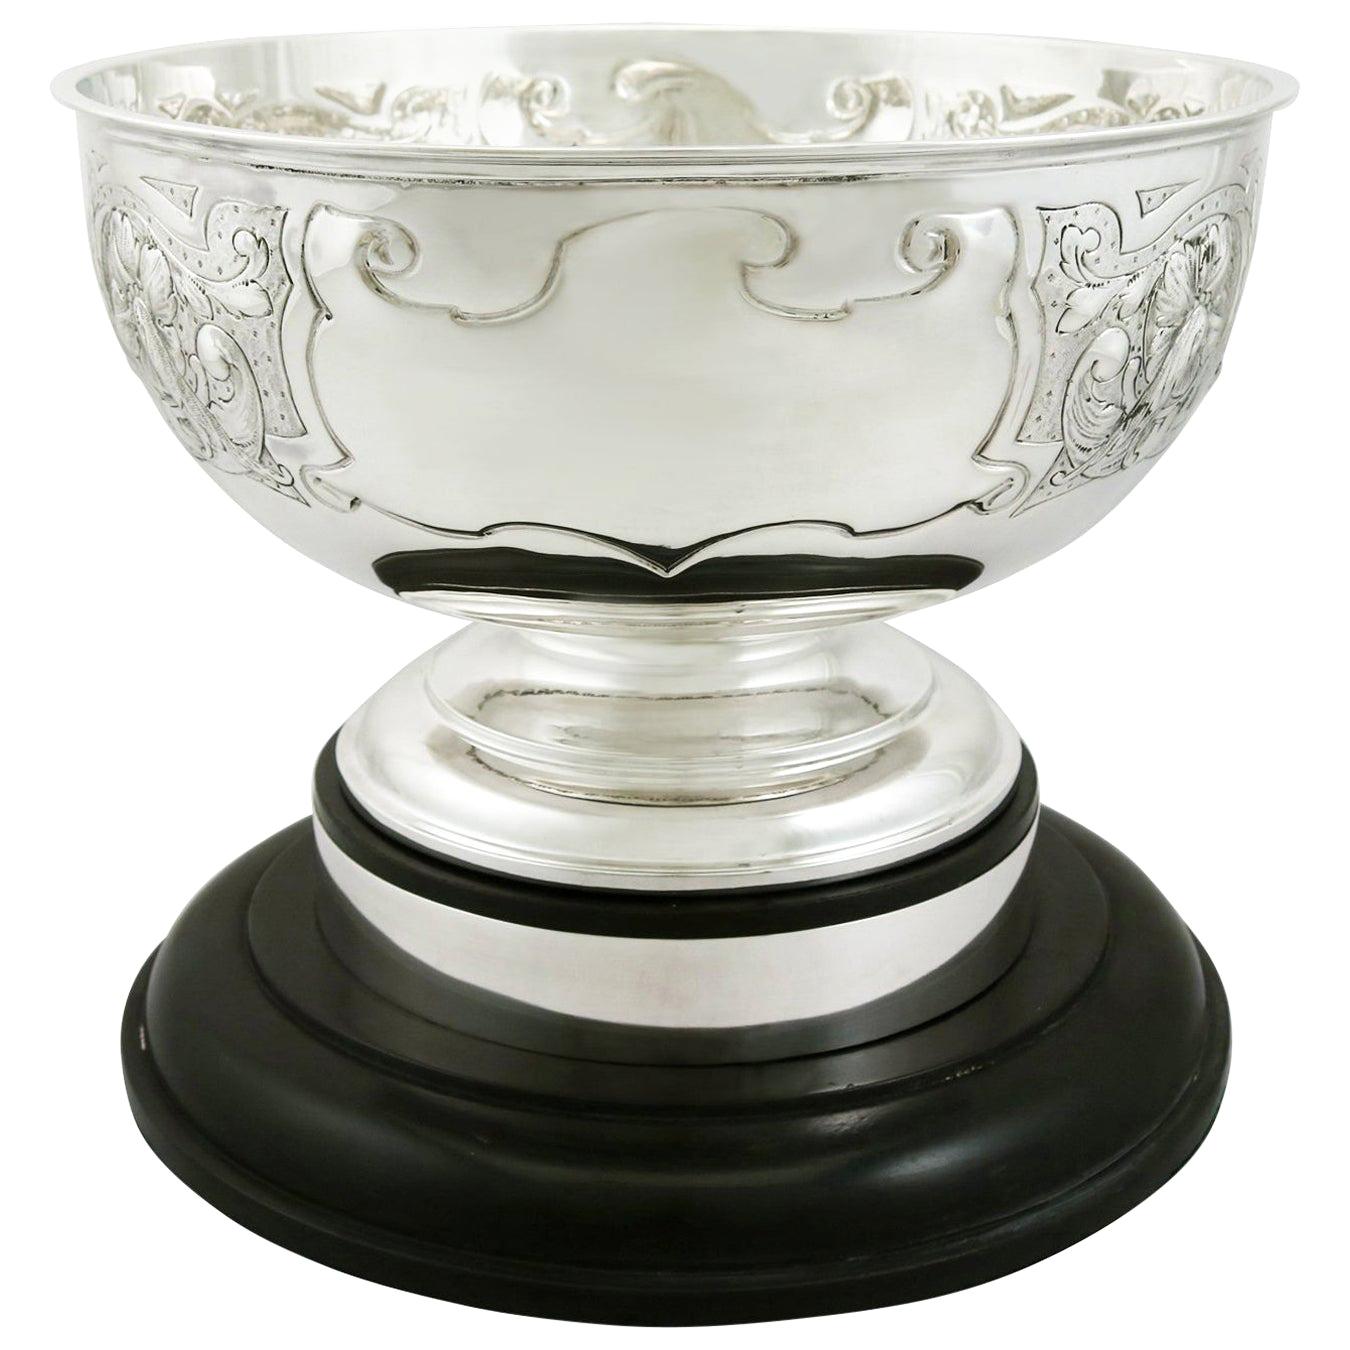 Antique Edwardian Sterling Silver Presentation Bowl by James Deakin & Sons